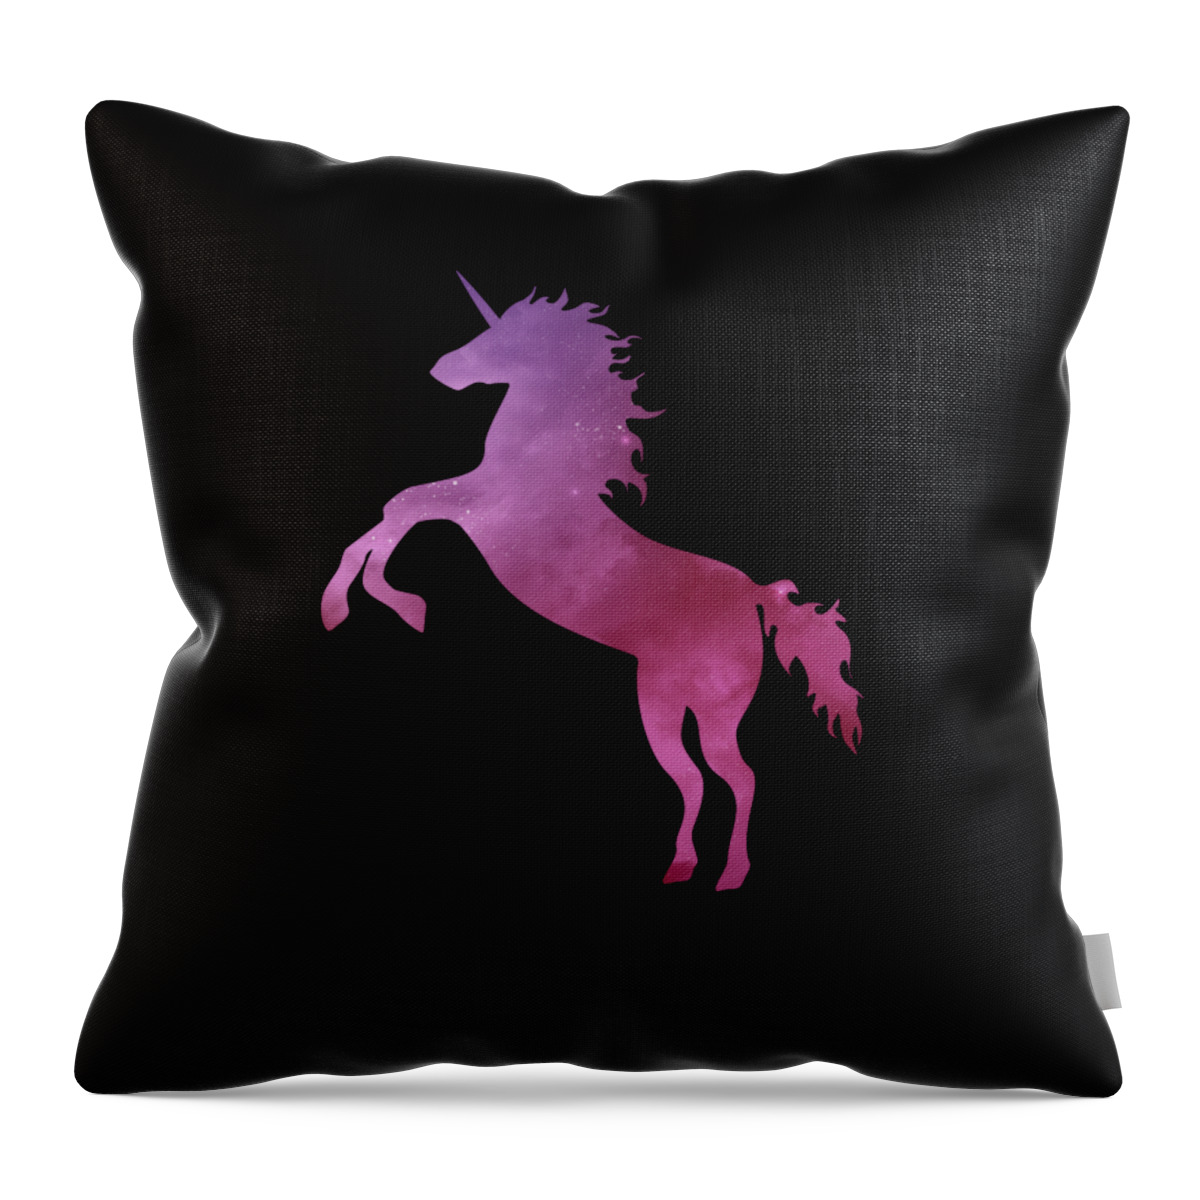 Unicorn Throw Pillow featuring the digital art Space Unicorn by Sambel Pedes